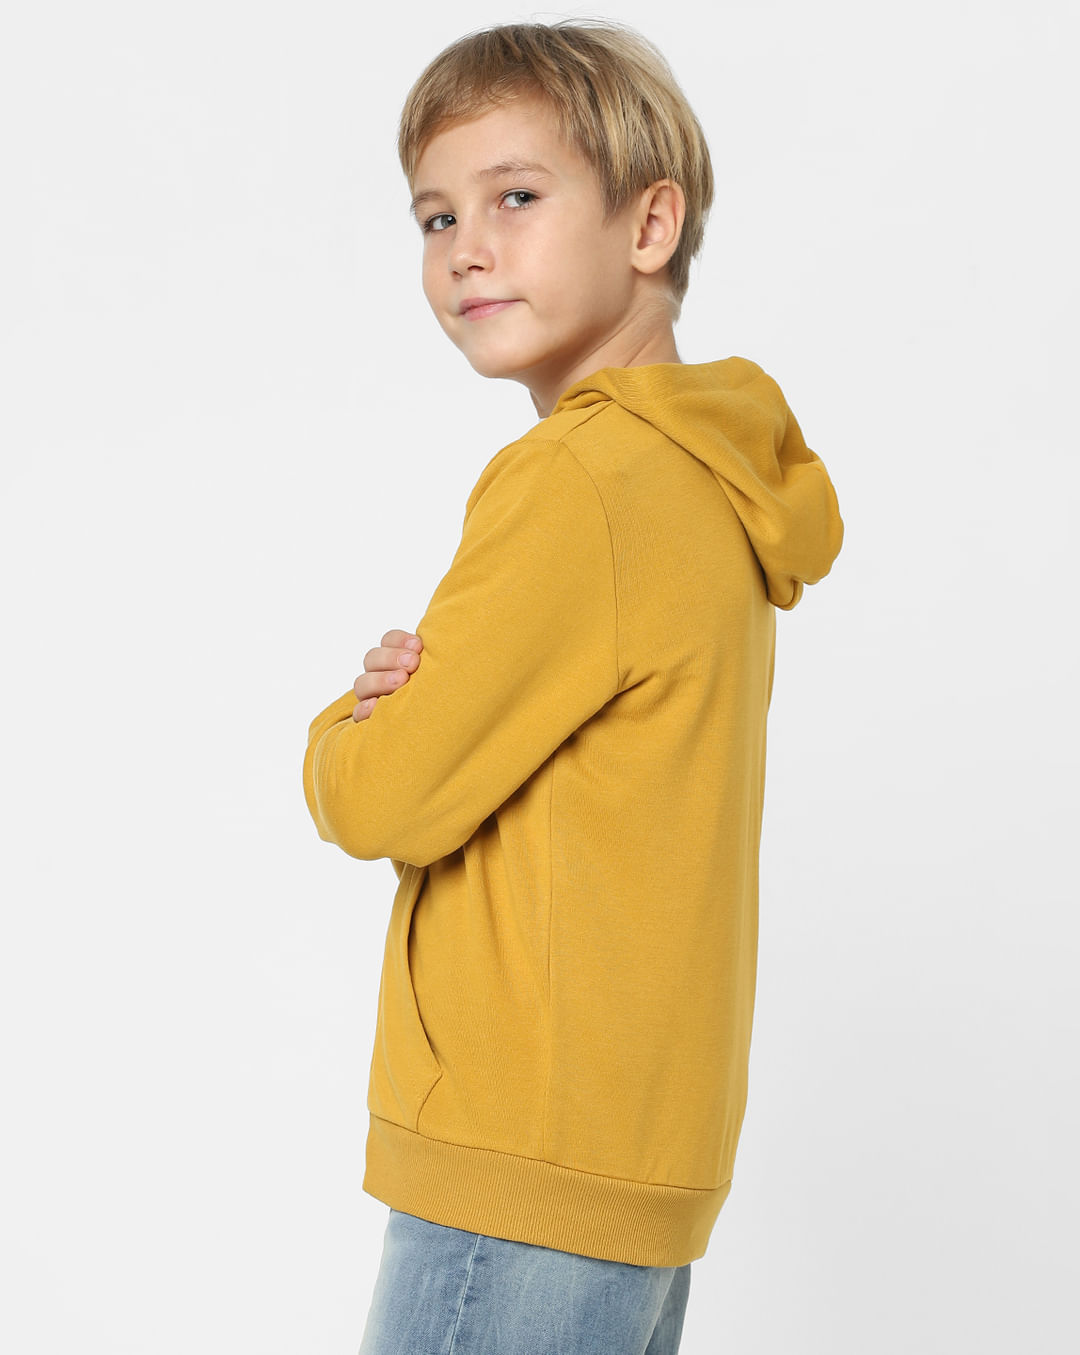 Buy Boys Mustard Zip-Up Hooded Sweatshirt Online in India at Jack ...